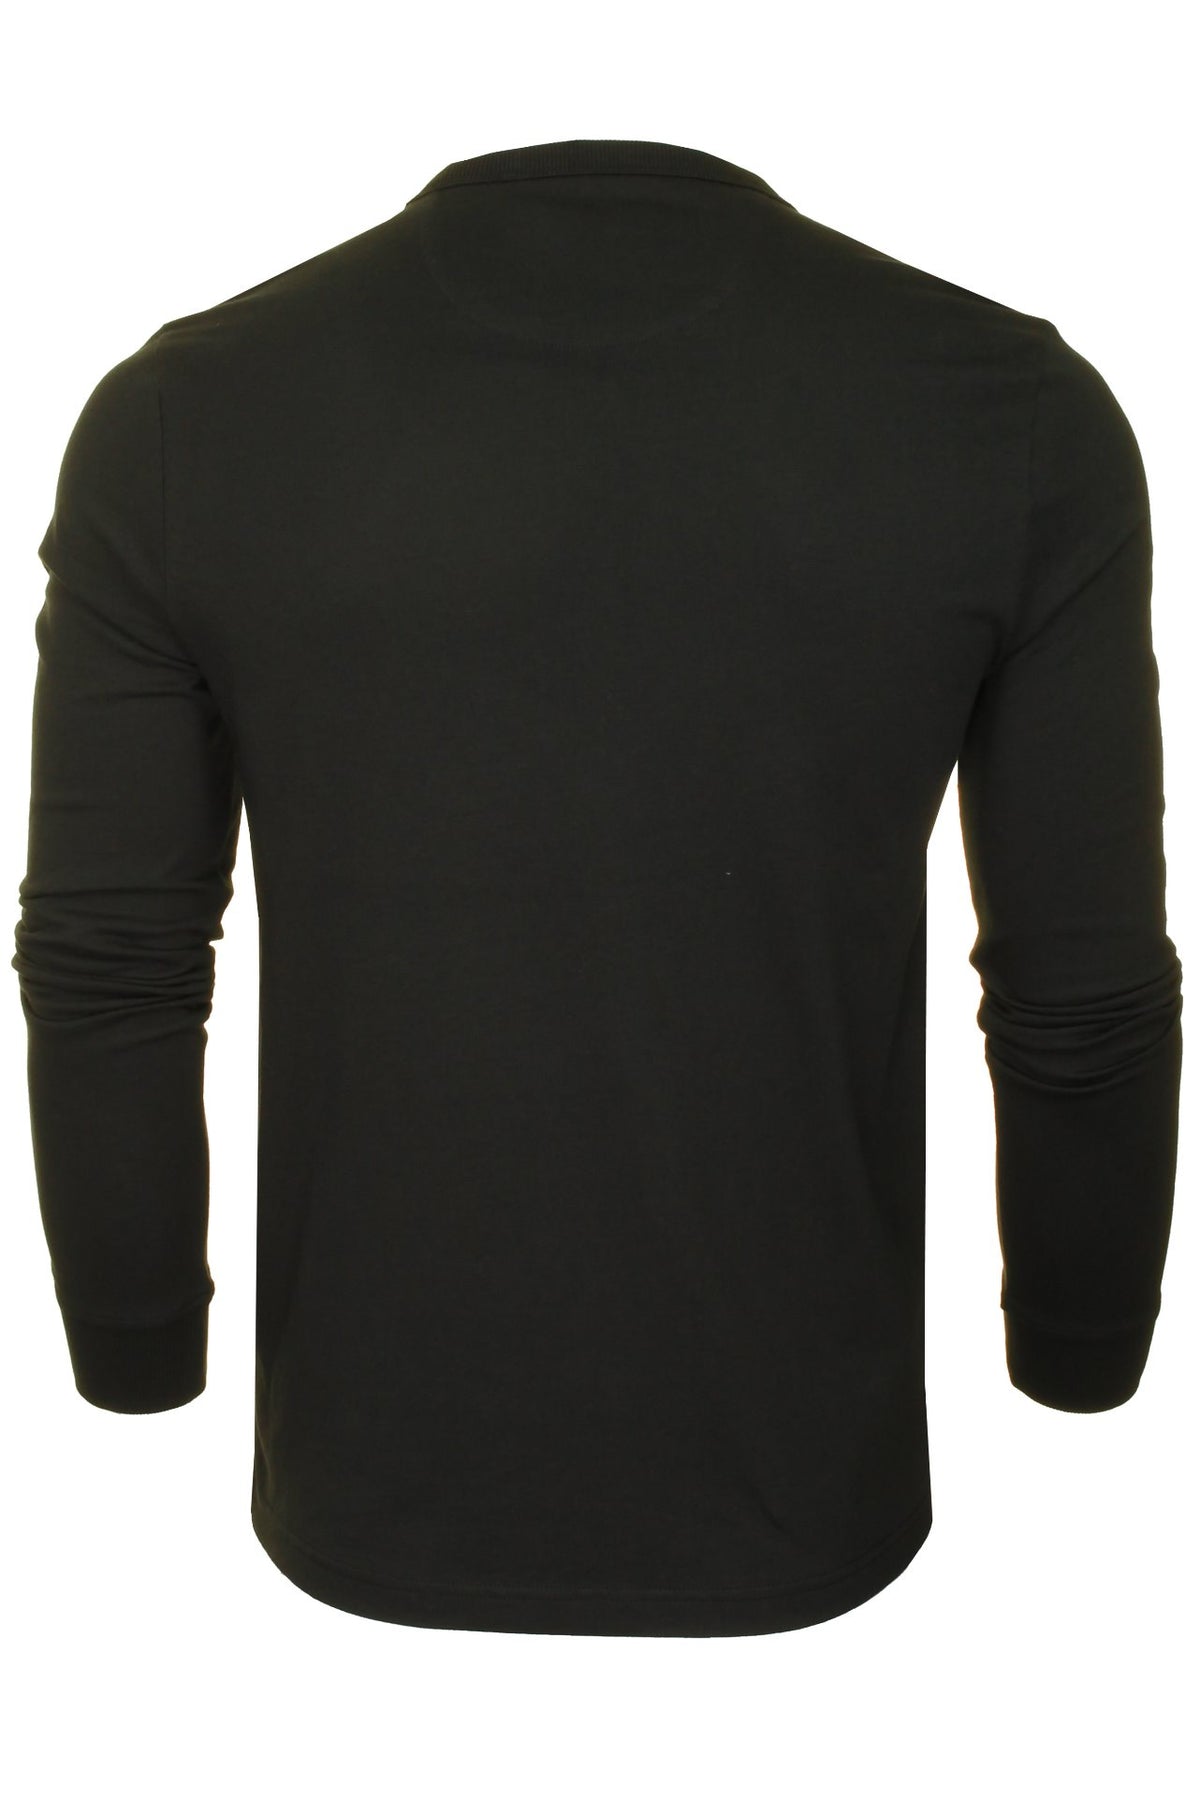 Farah Mens 'Wothington' T-Shirt - Long Sleeved, 03, F4Ksb057, Black